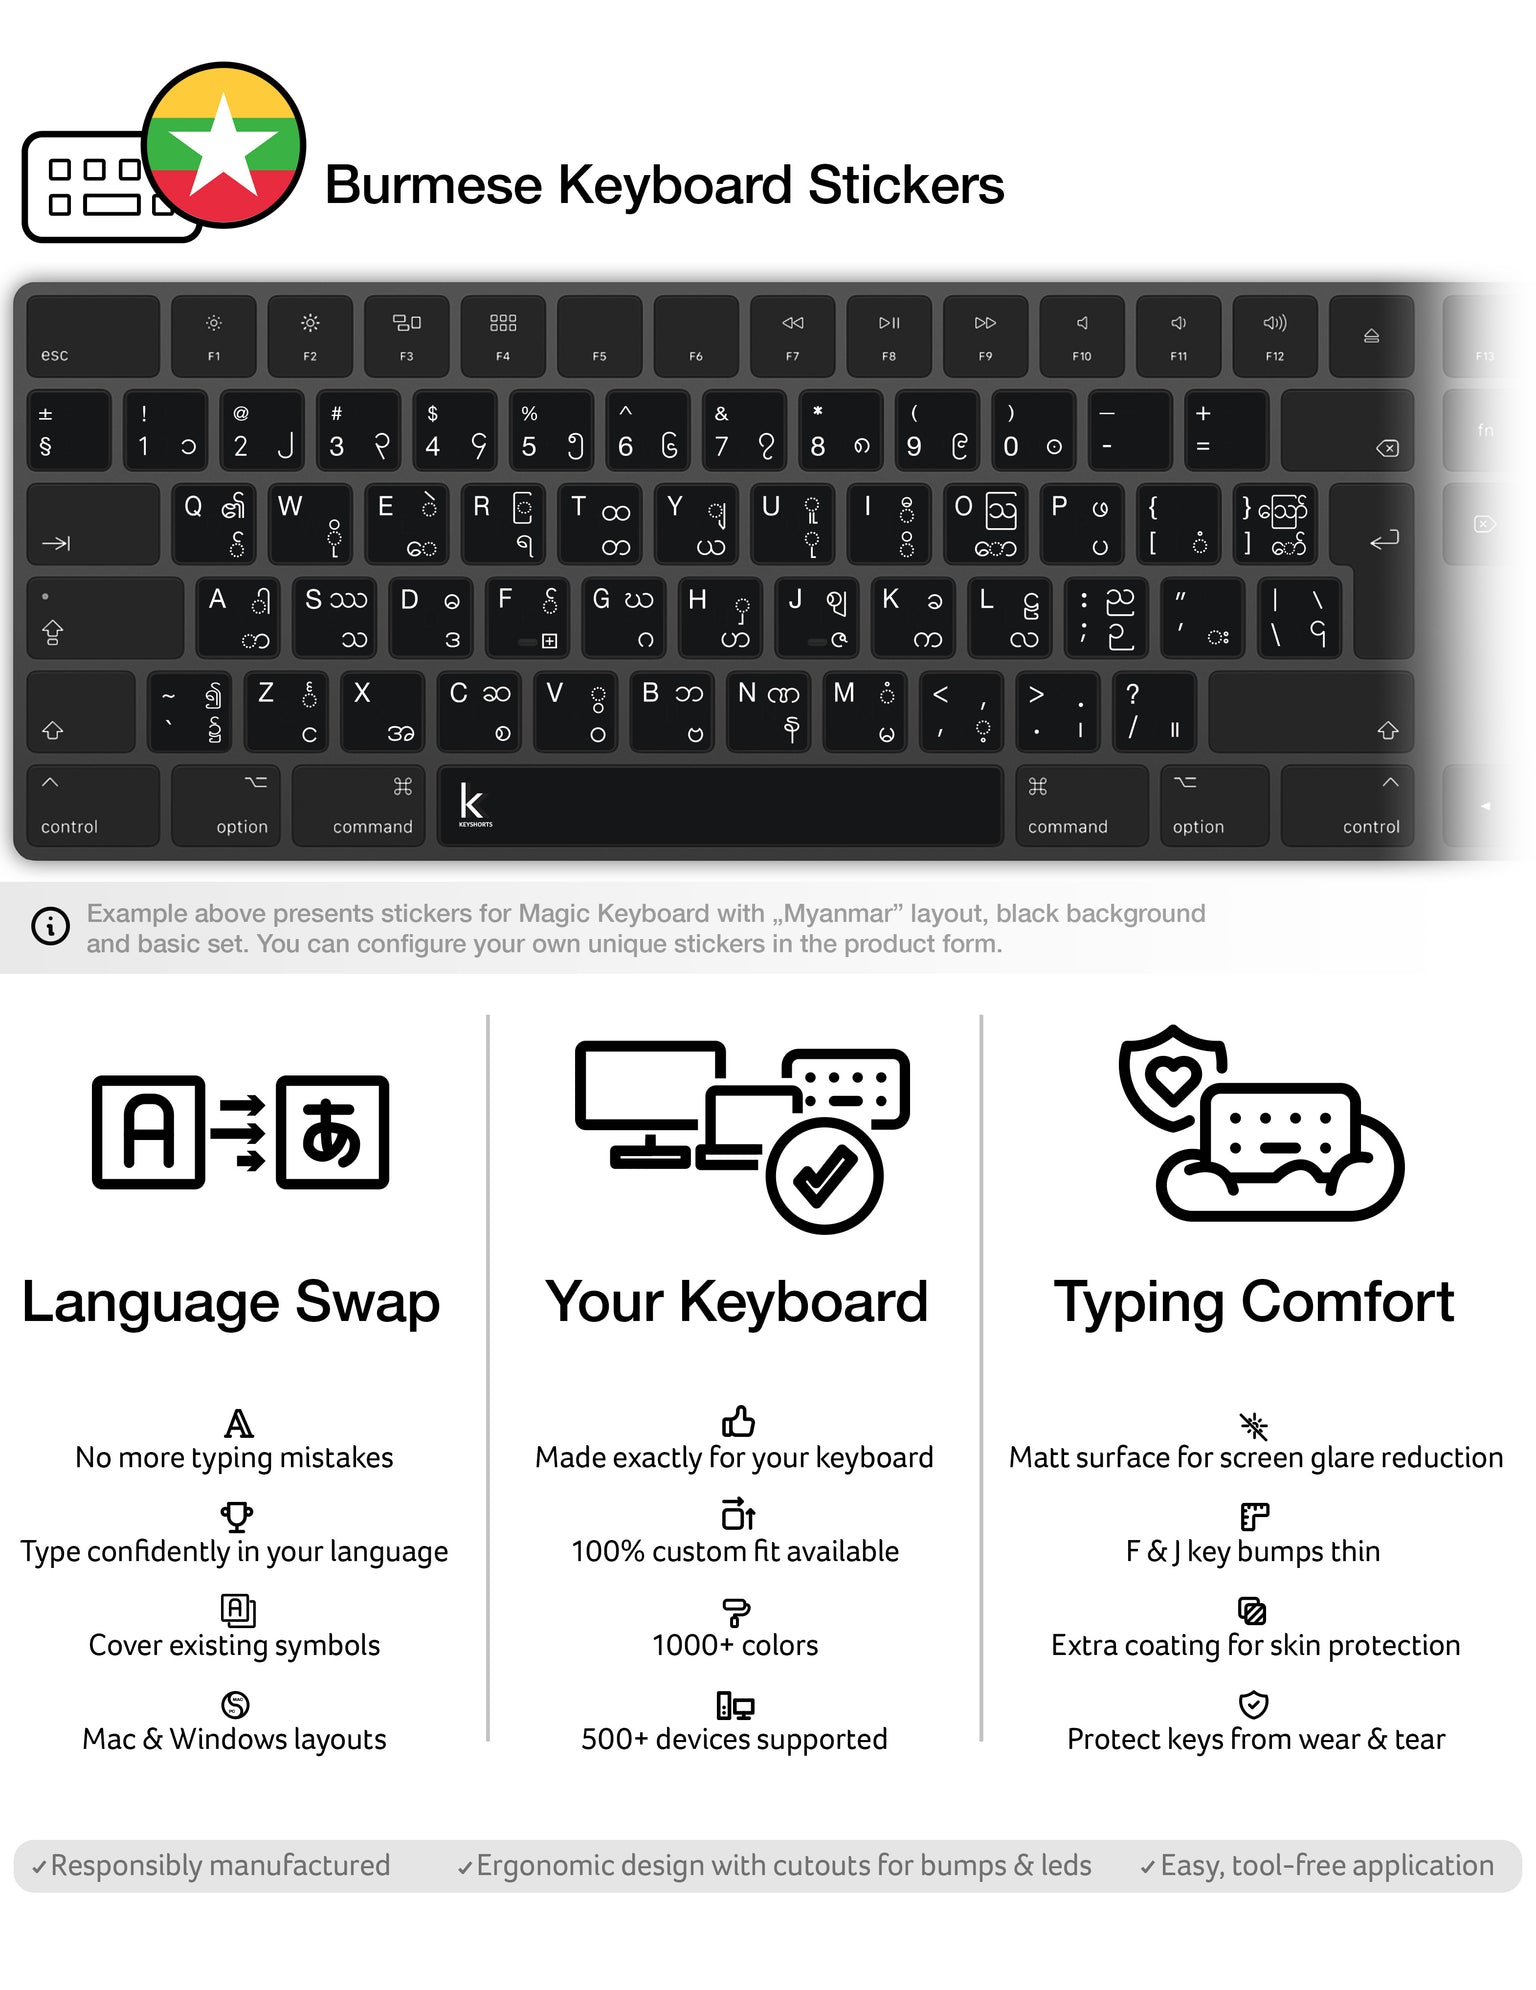 Burmese (Myanmar) Keyboard Stickers